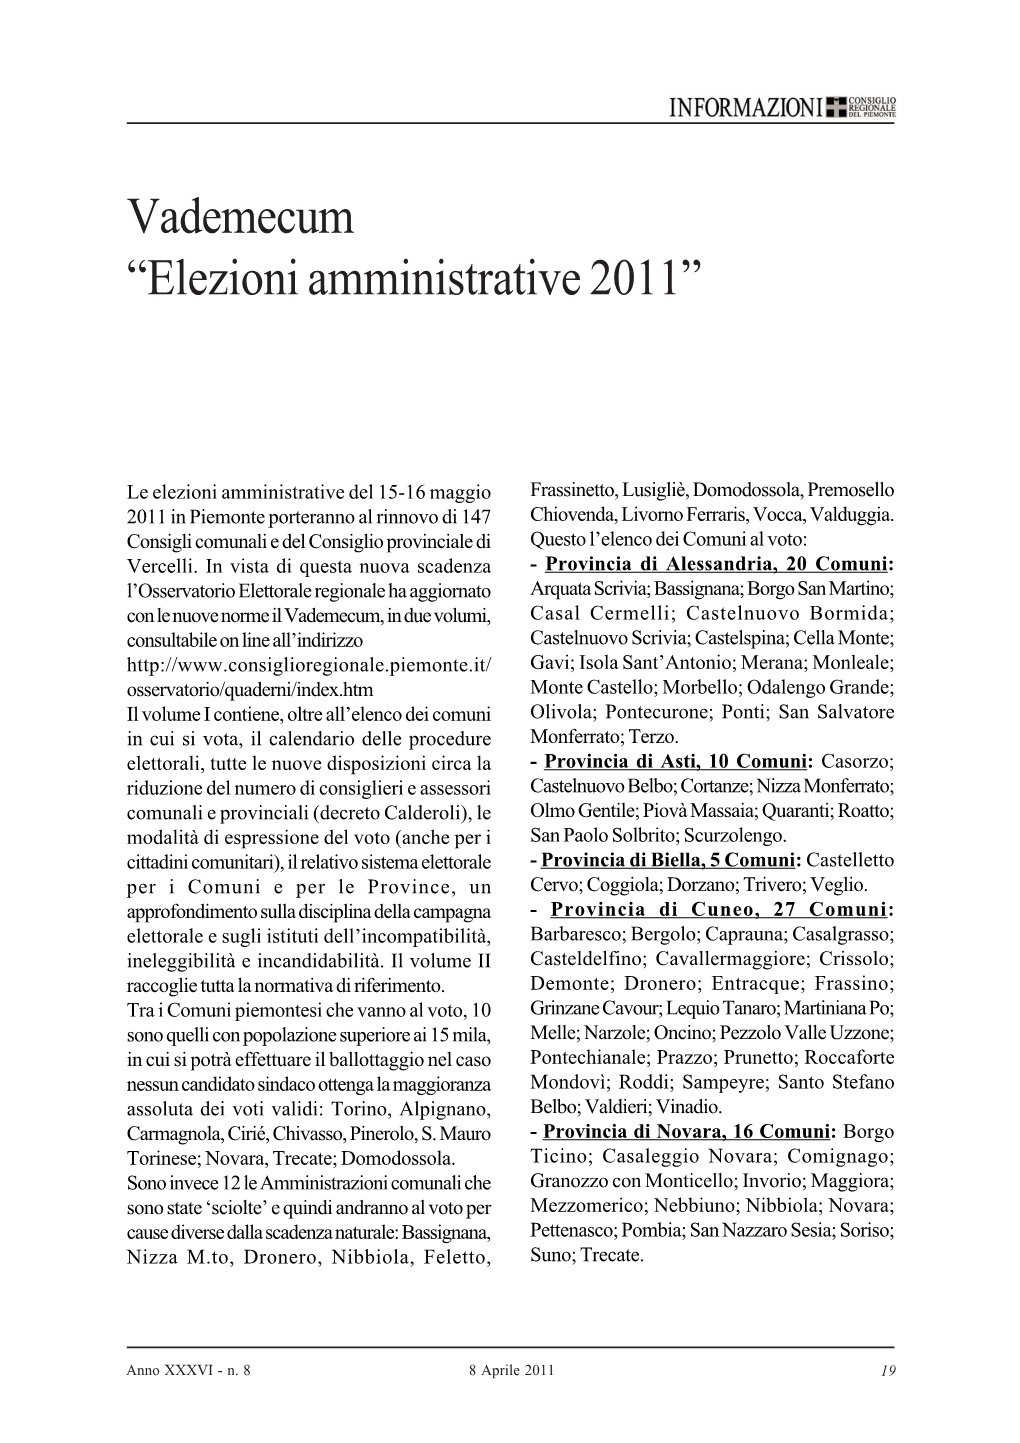 Vademecum “Elezioni Amministrative 2011”